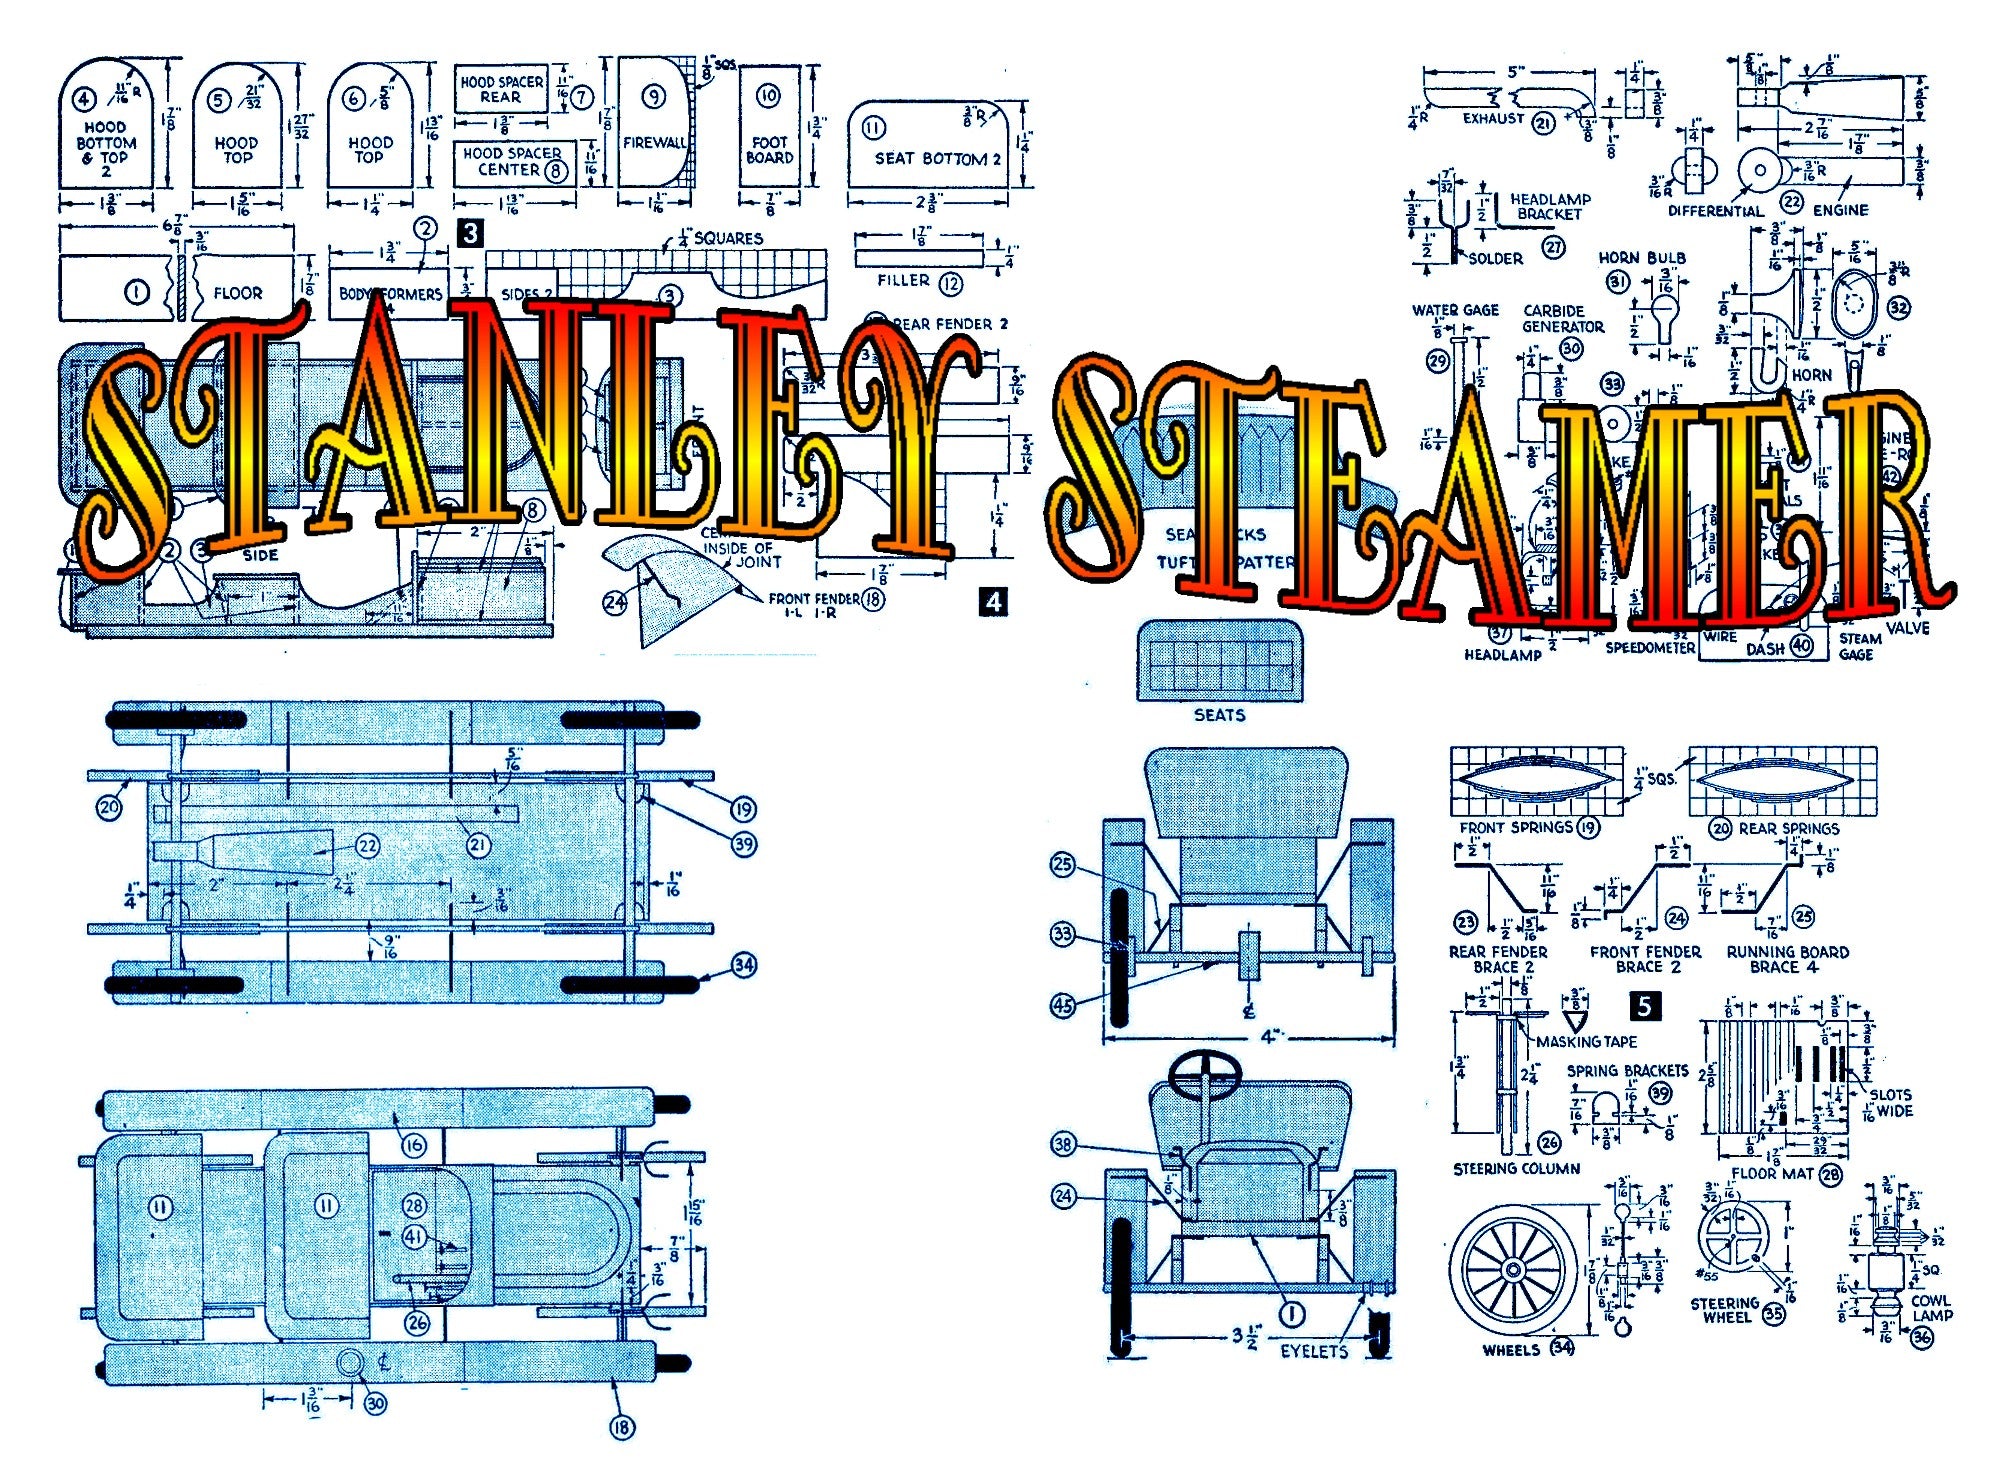 Full Size Printed Plans Stanley Steamer Scale 1 16 L 8 W 4 Vintage Model Plans